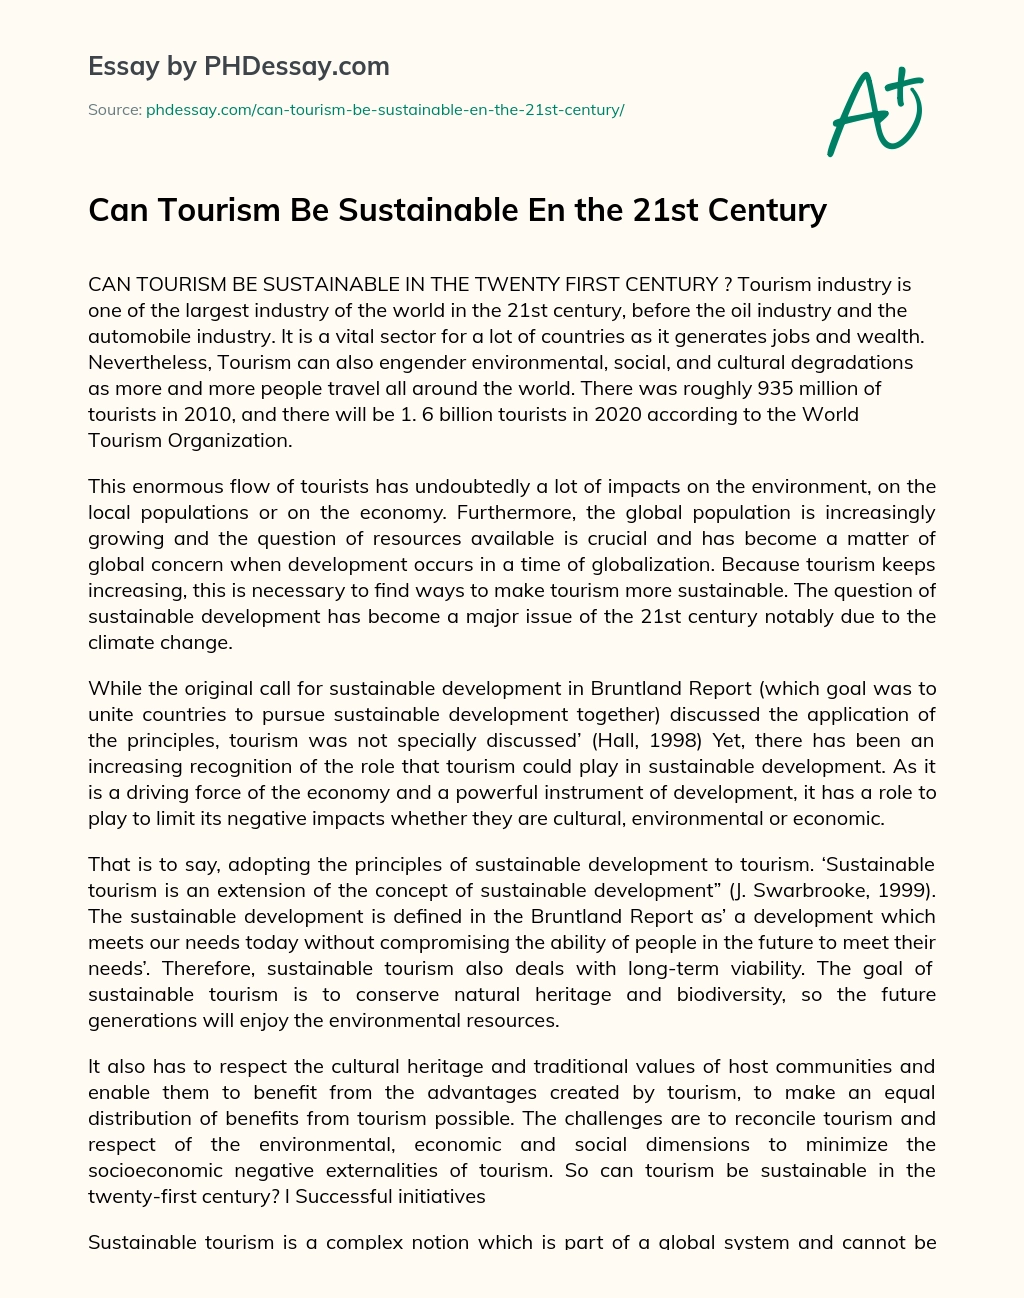 tourism and environment essay